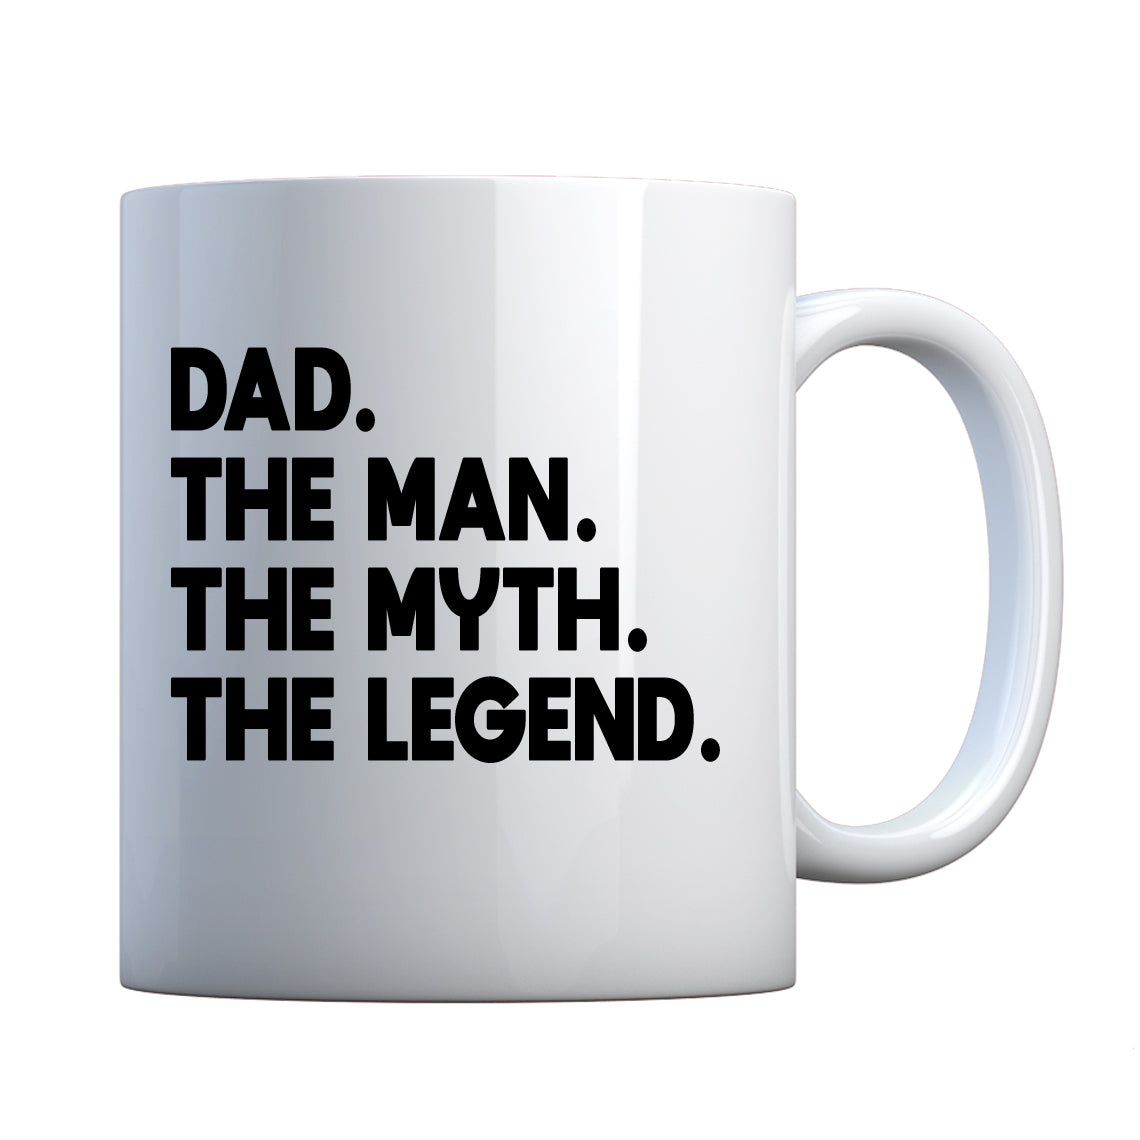 Dad. The Man the Myth the Legend Ceramic Gift Mug